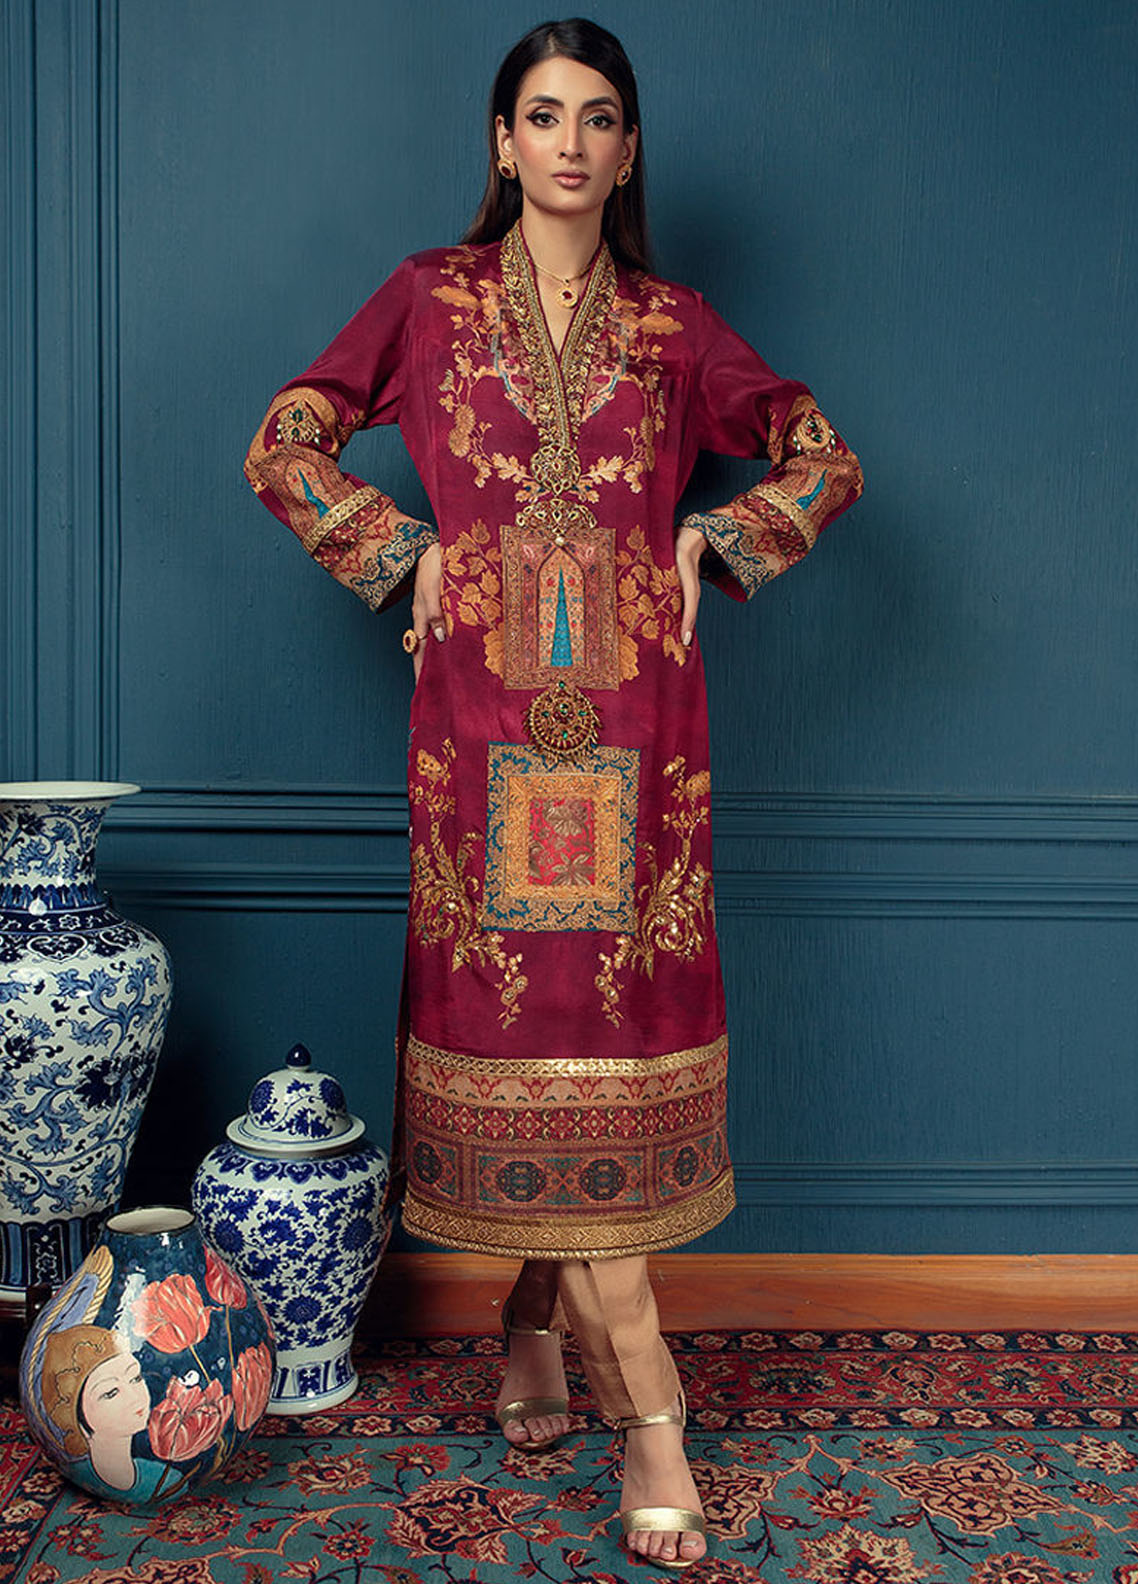 Shamaeel Ansari Pret Luxury Silk Shirt SHA23A Golden Hour